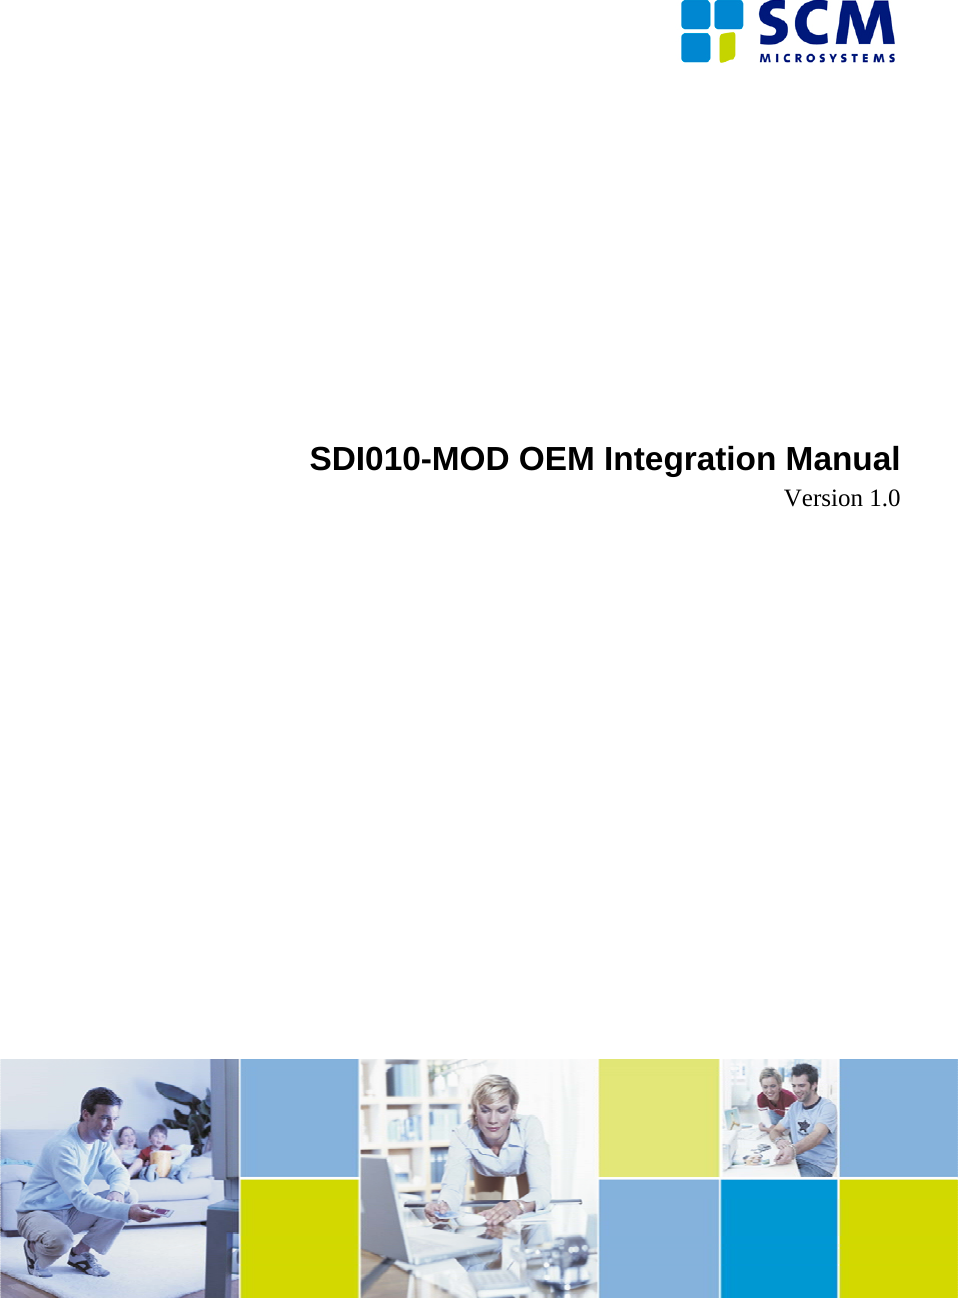                SDI010-MOD OEM Integration Manual Version 1.0                    